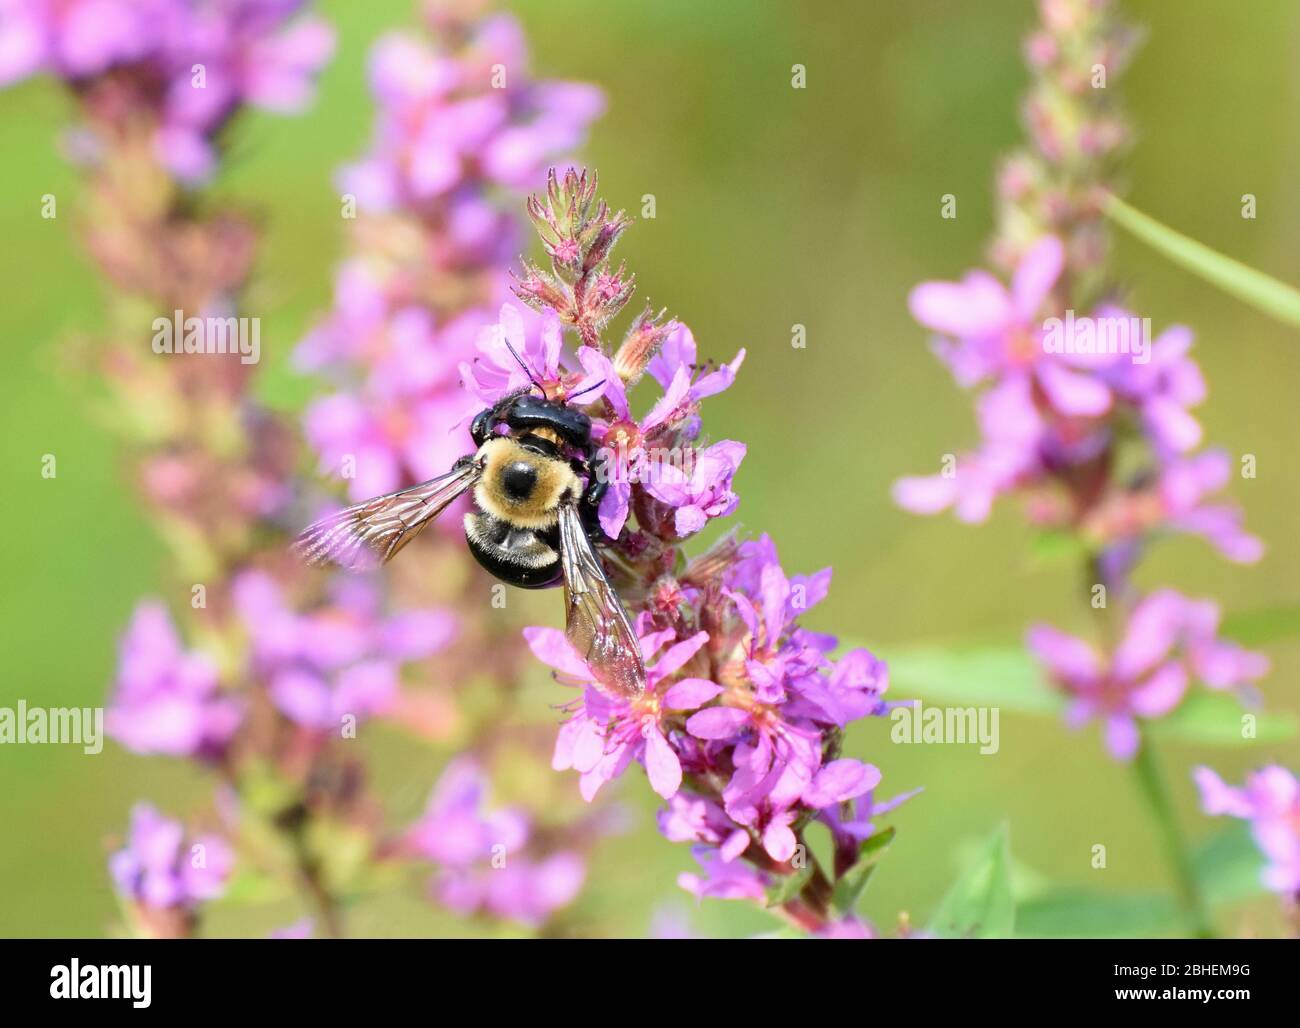 Bumble bee feeding on flower Stock Photo